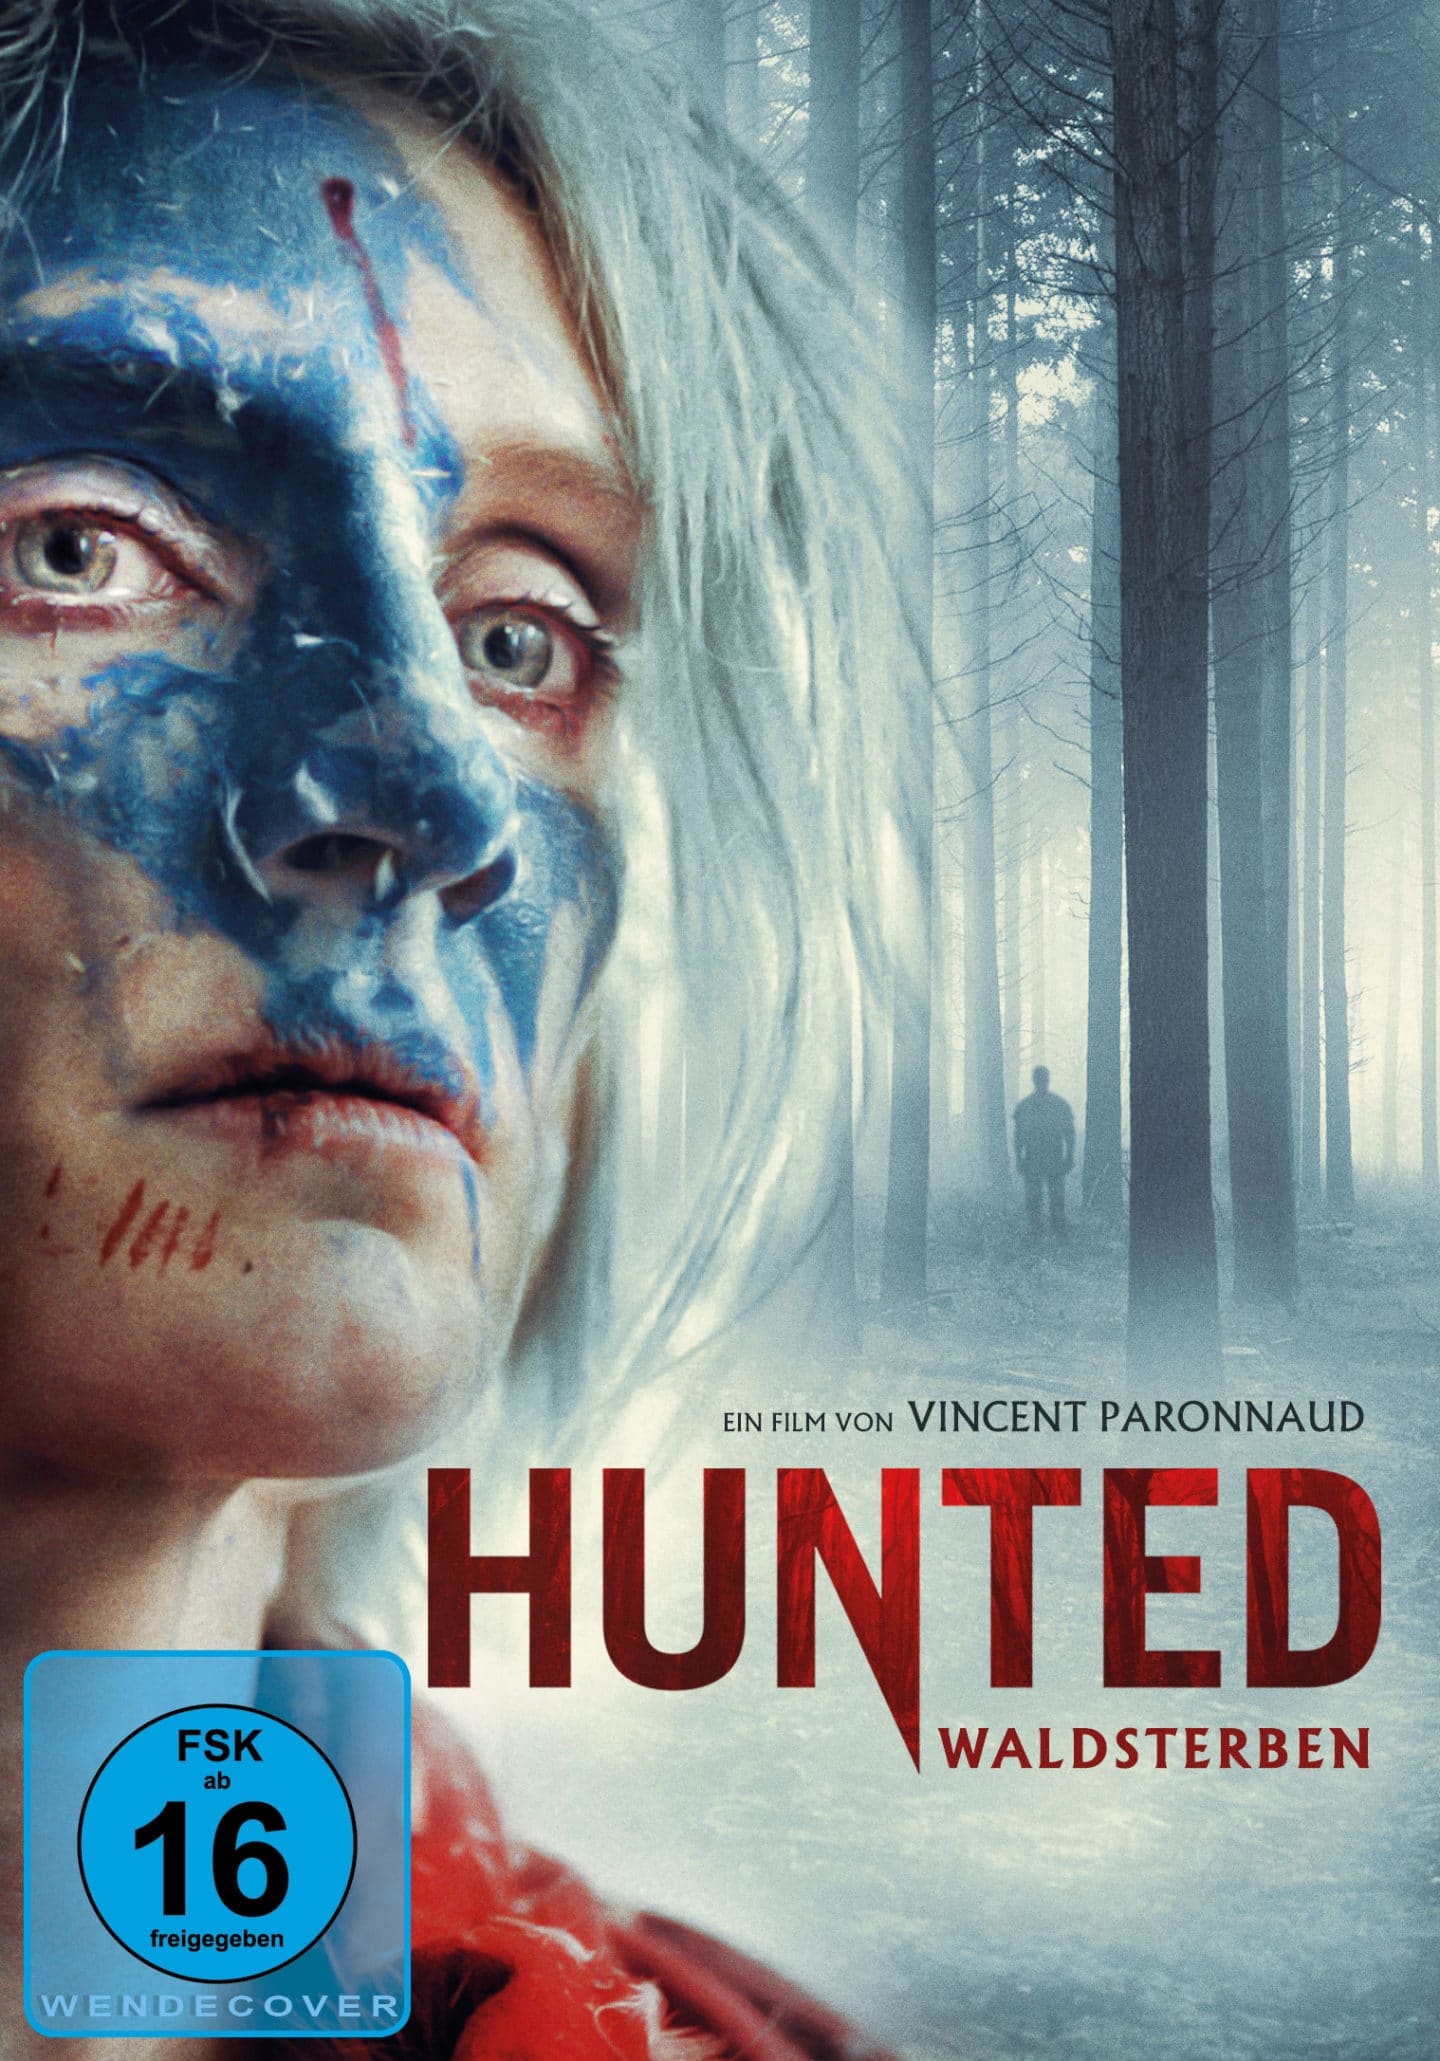 Hunted - Waldsterben - DVD Cover